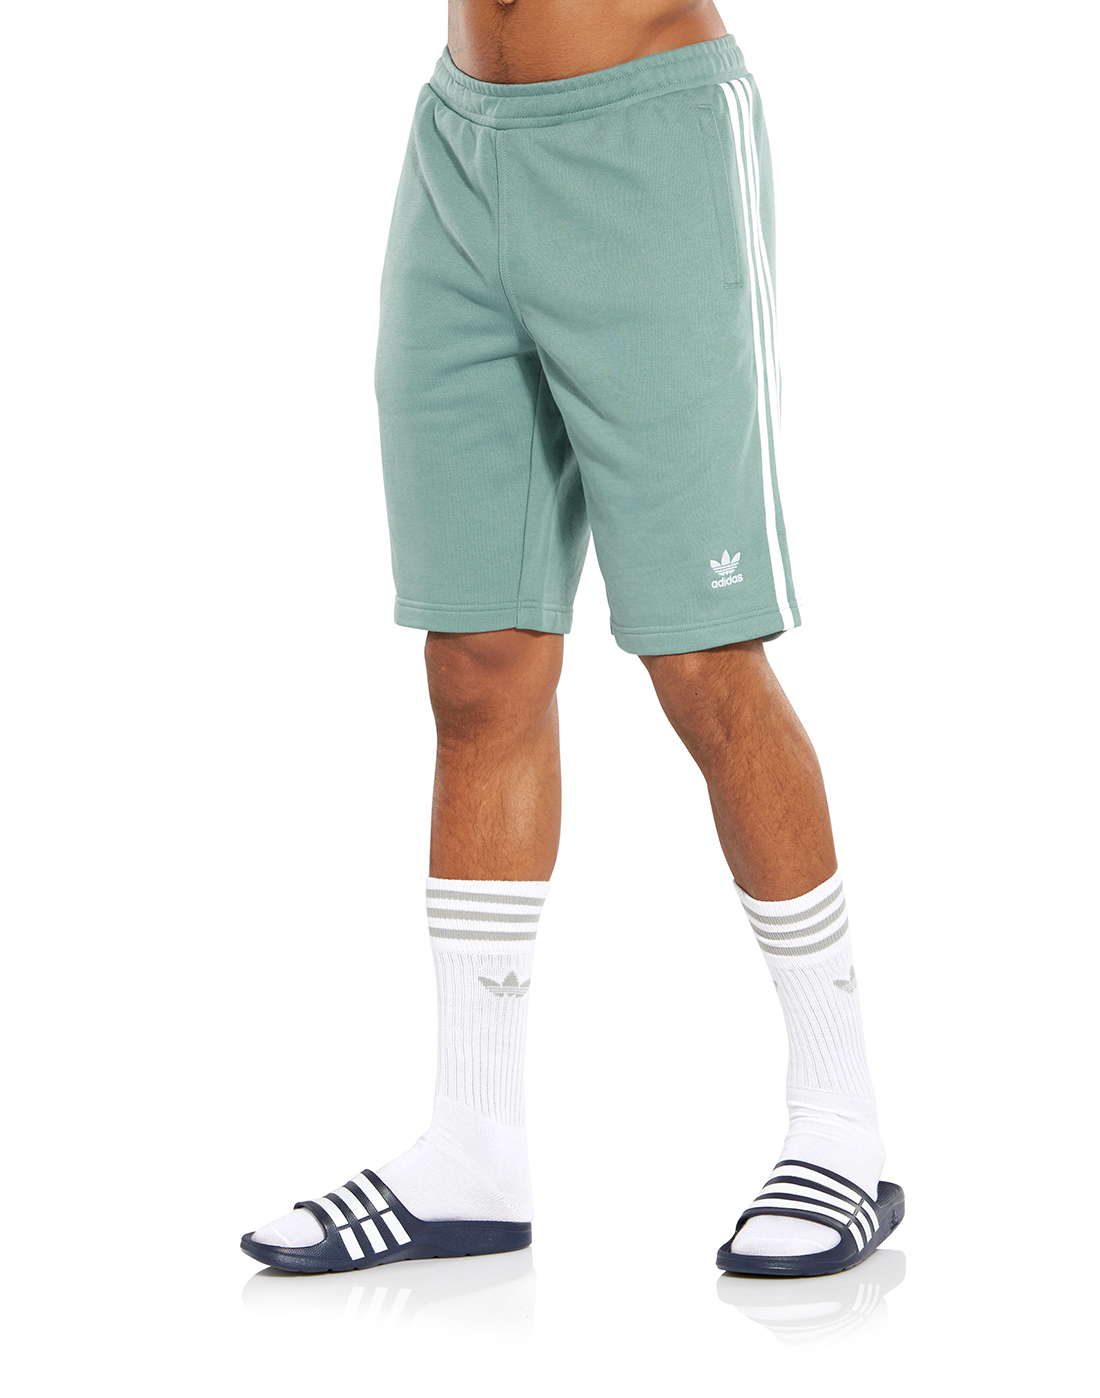 adidas mint green shorts